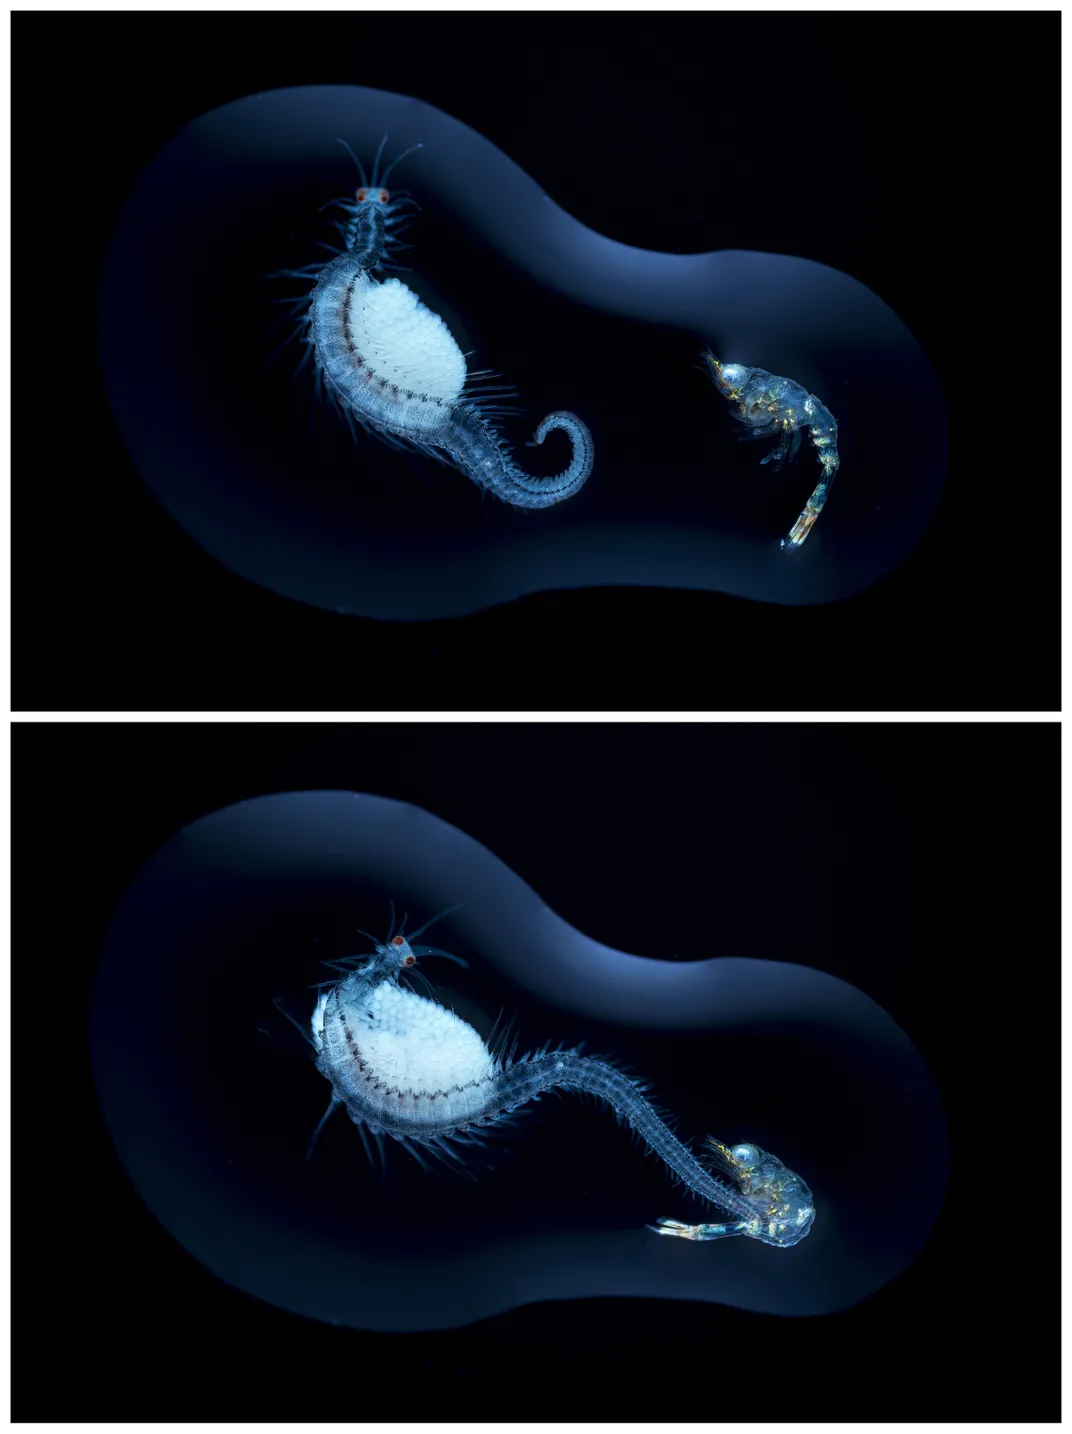 sea worm carrying egg clutch fends off shrimp-like larva